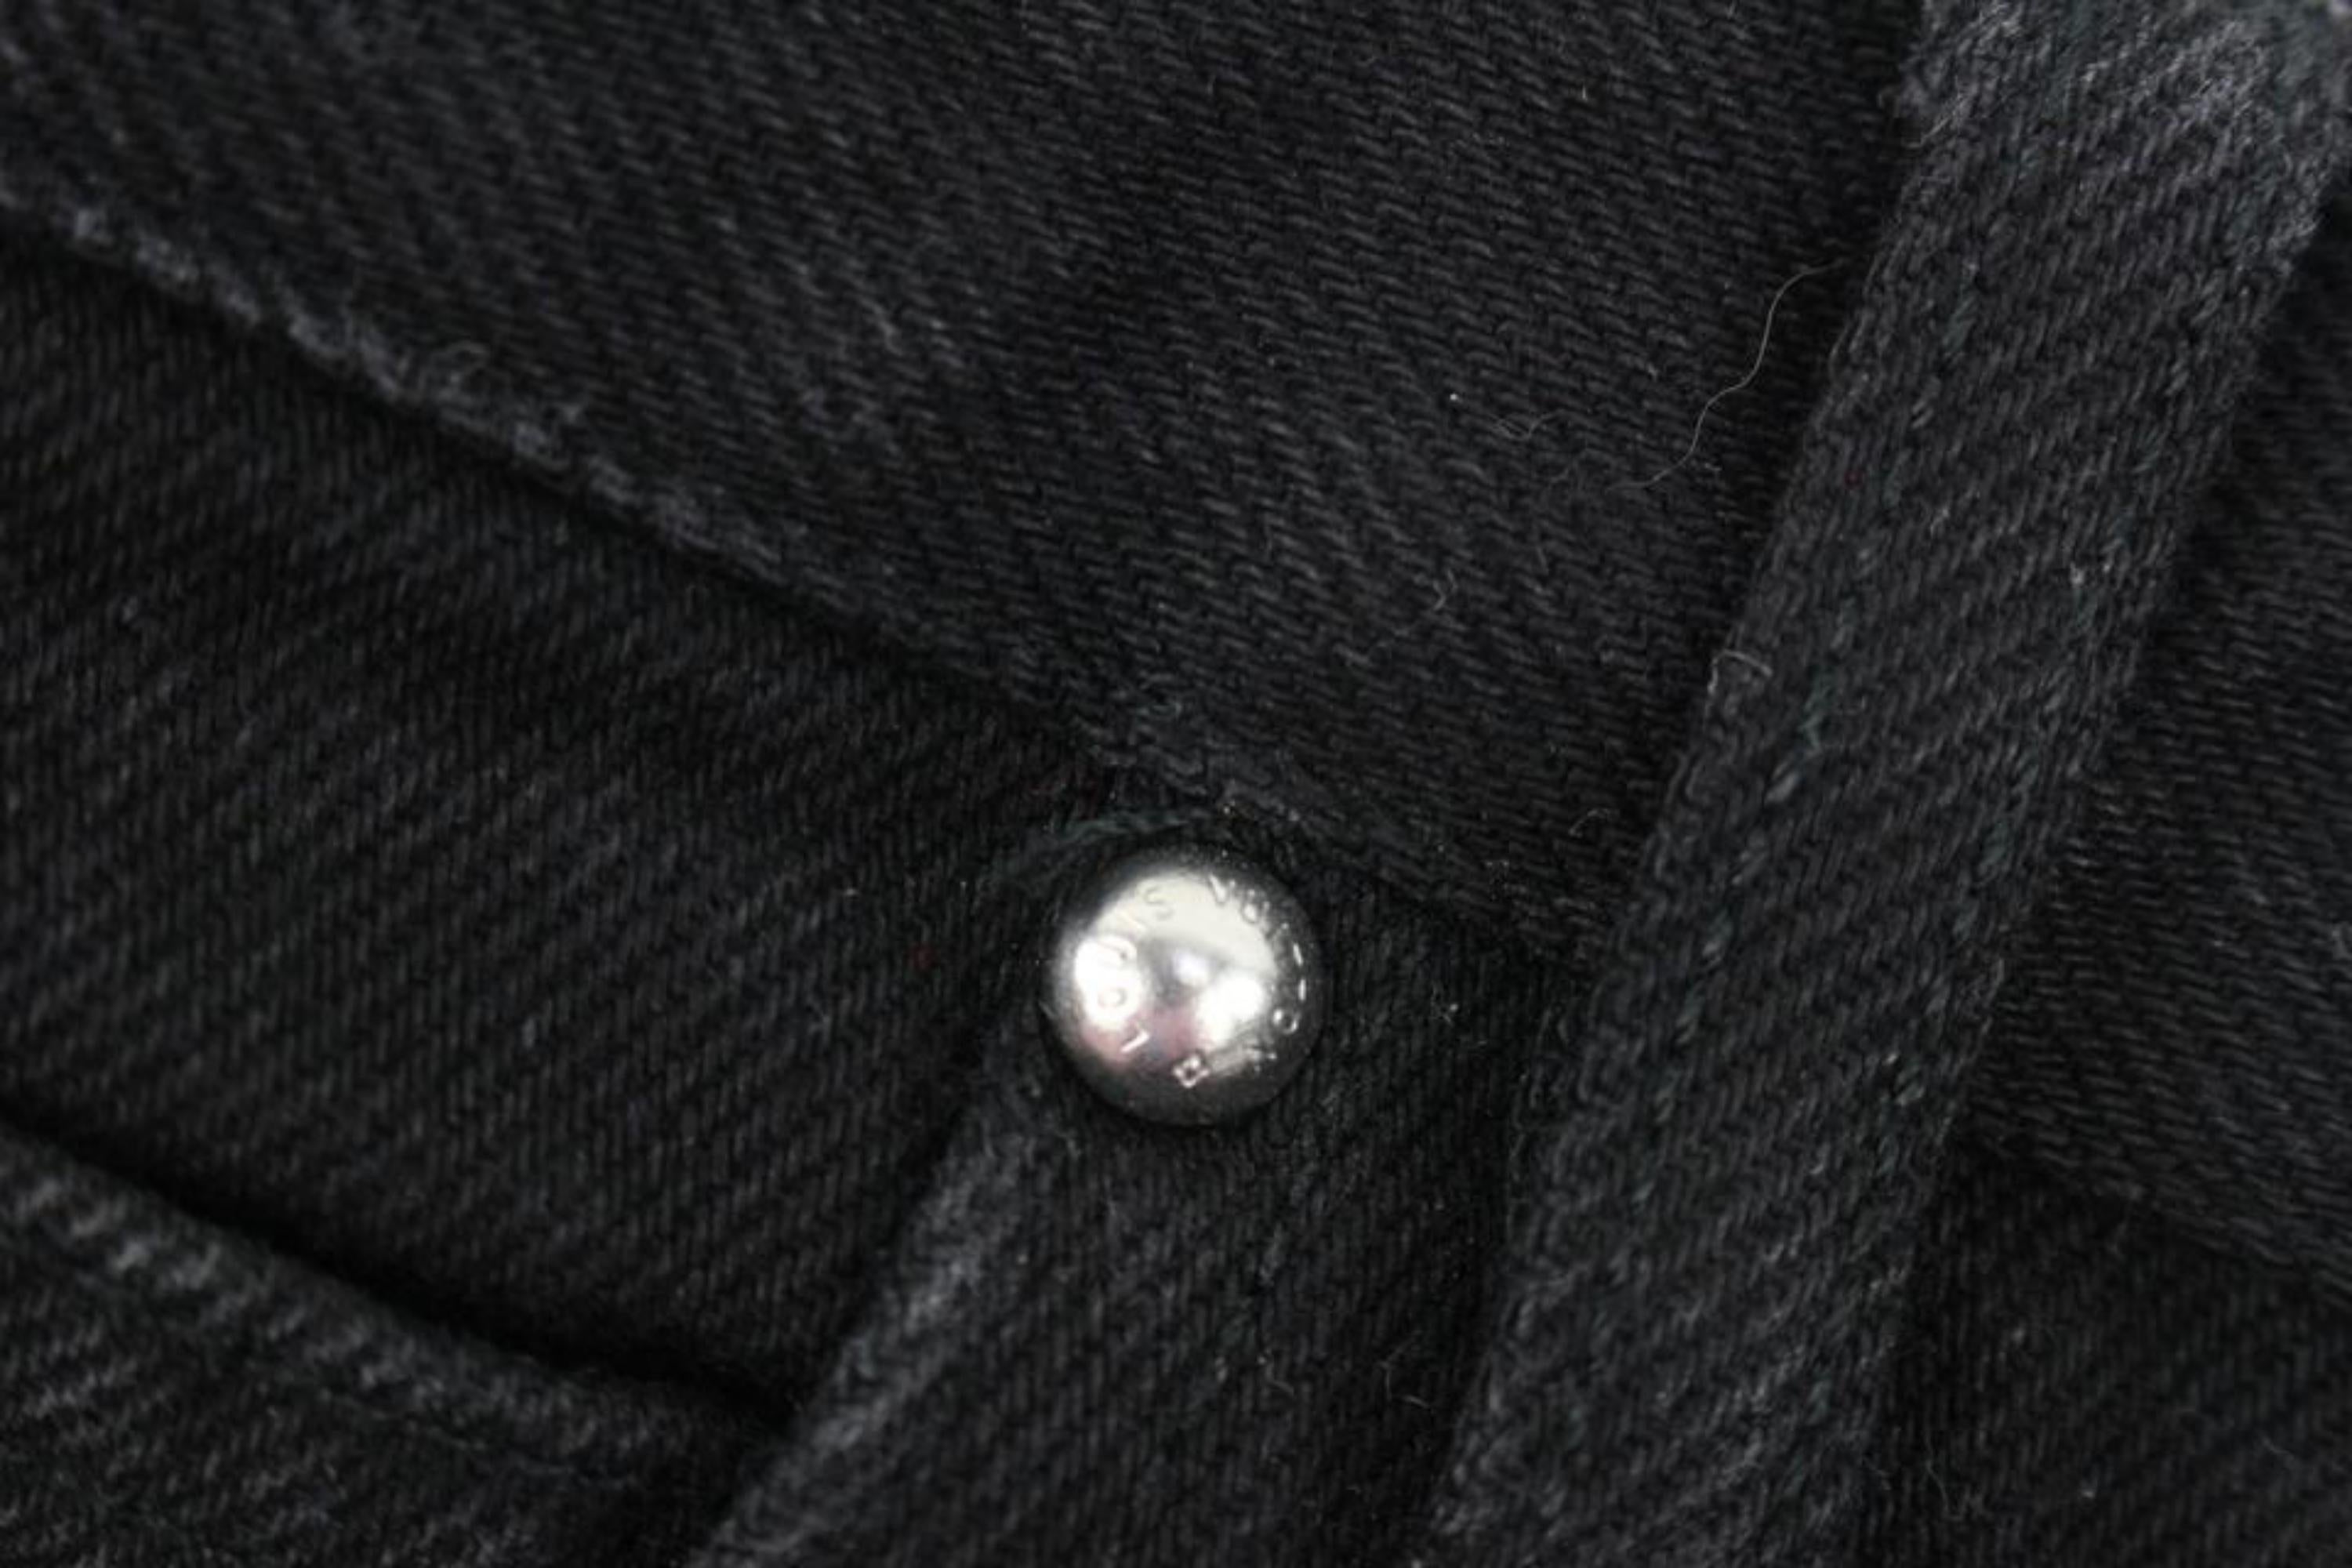 Louis Vuitton Uniformes Size 36/AU 8 Navy LV Button Collared Blazer Jacket